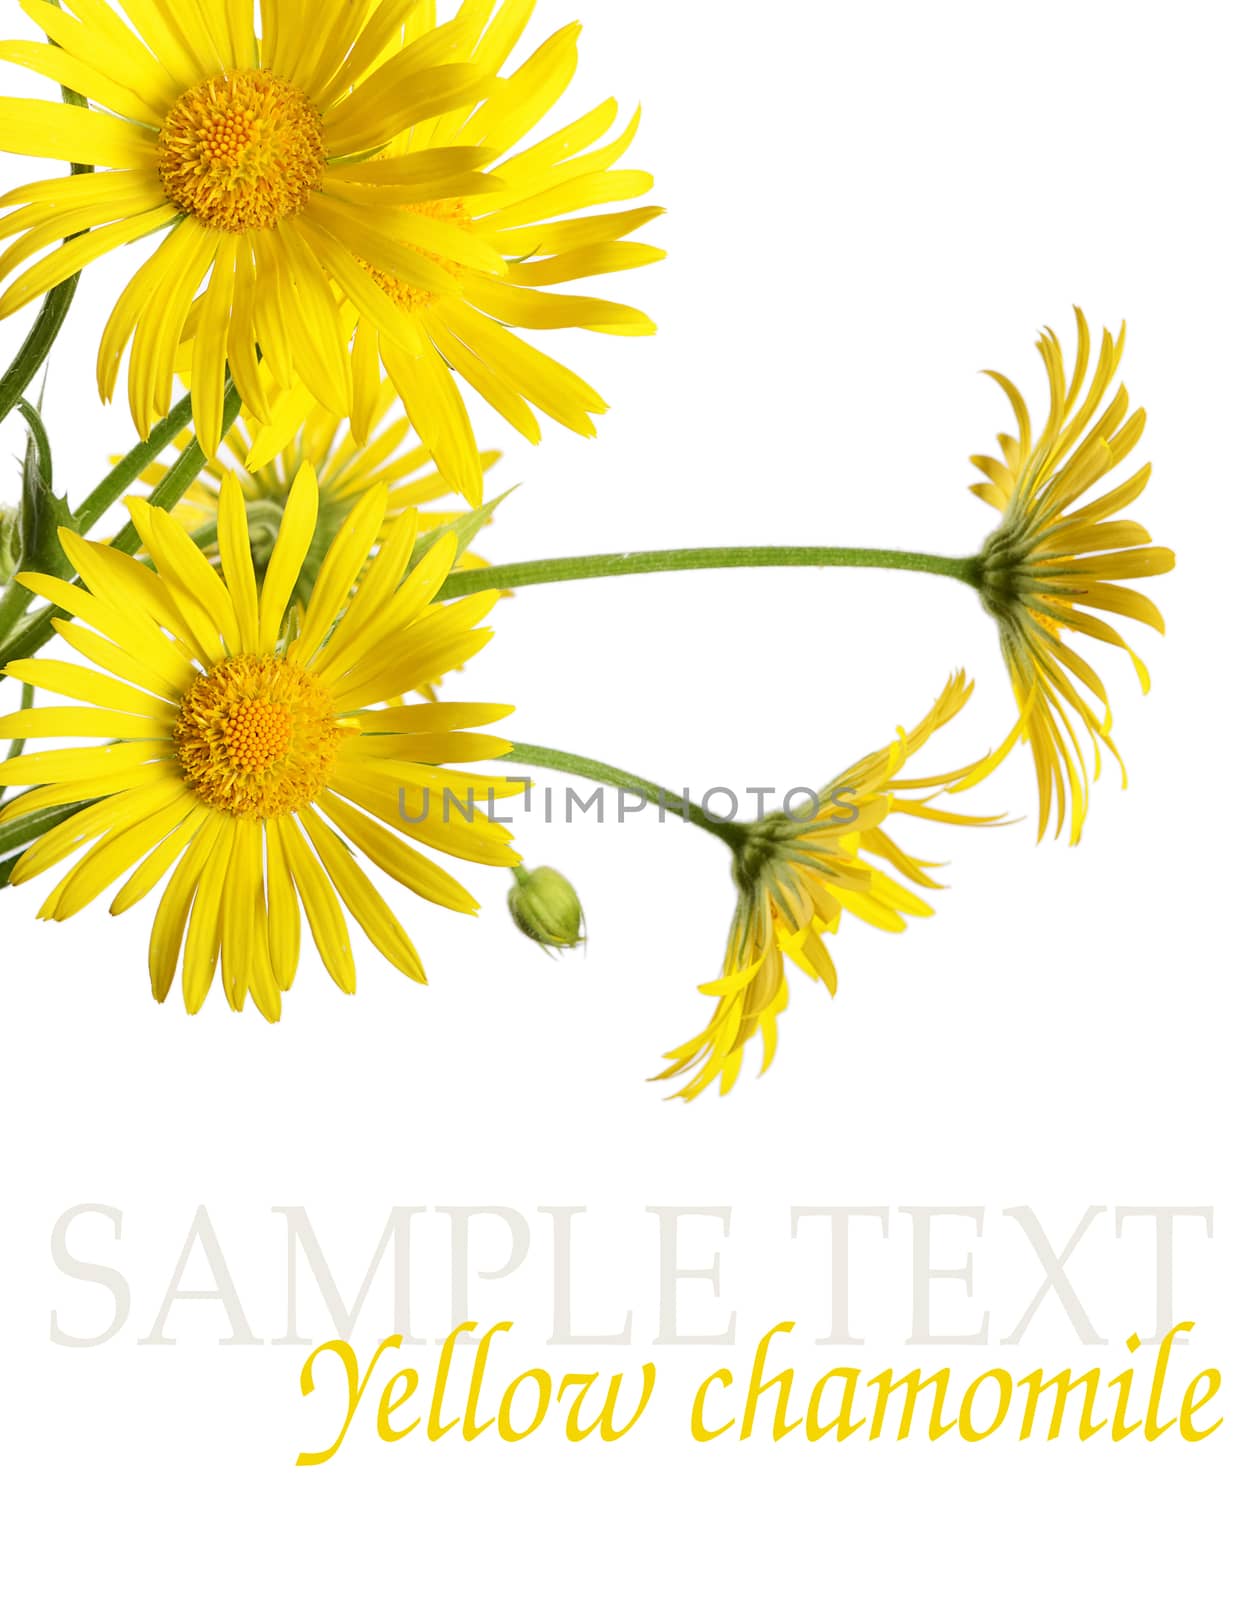 Yellow chamomile isolated on white background by SvetaVo